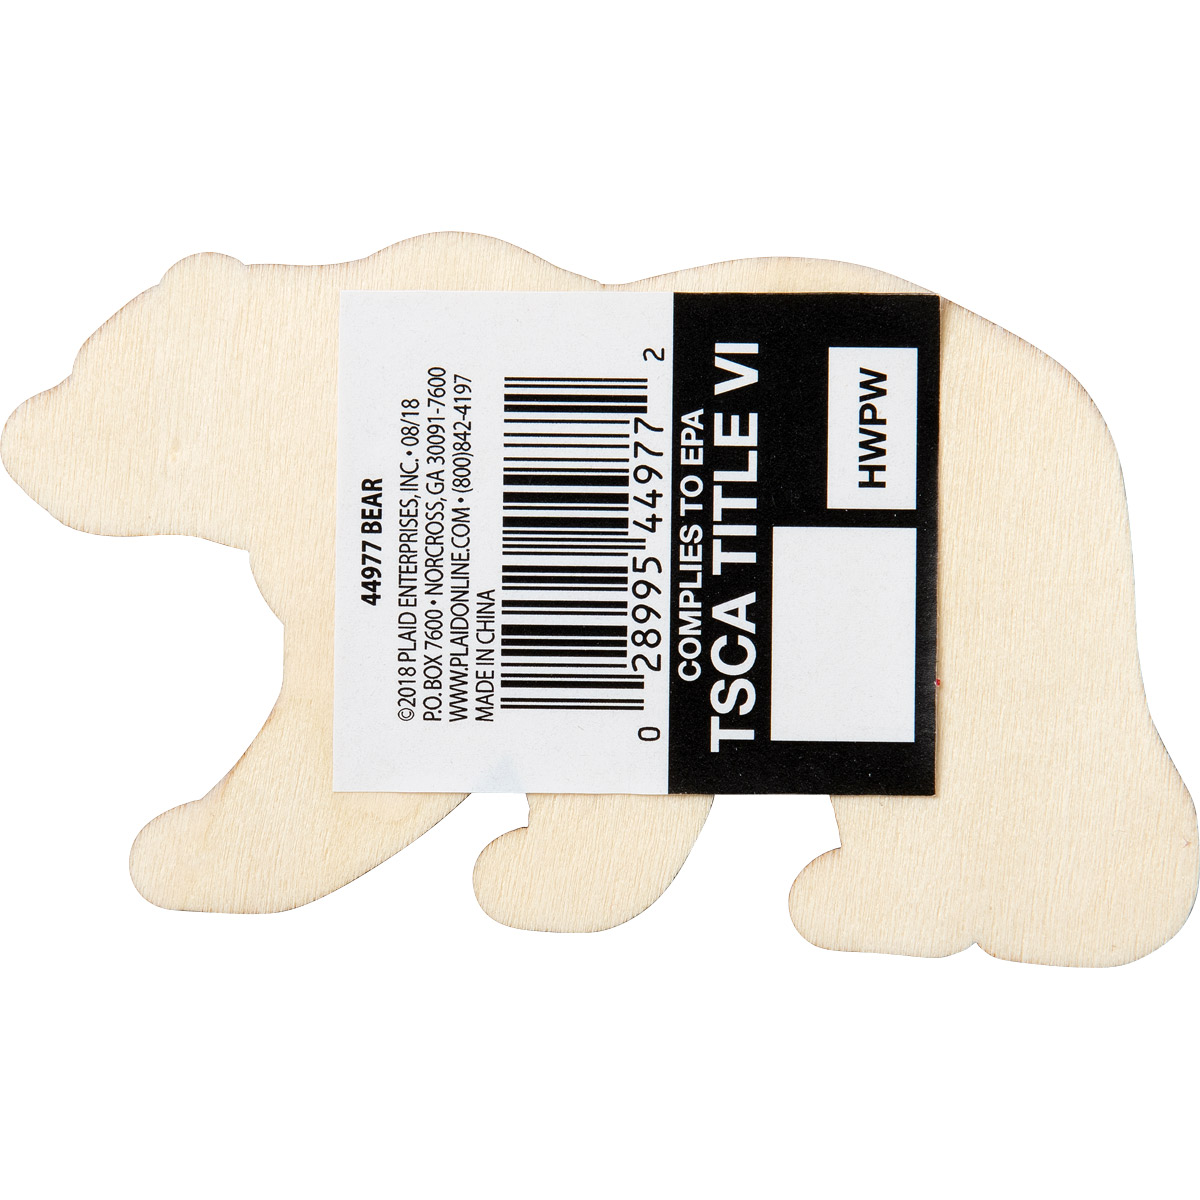 Plaid ® Wood Surfaces - Unpainted Layered Shapes - Bear - 44977